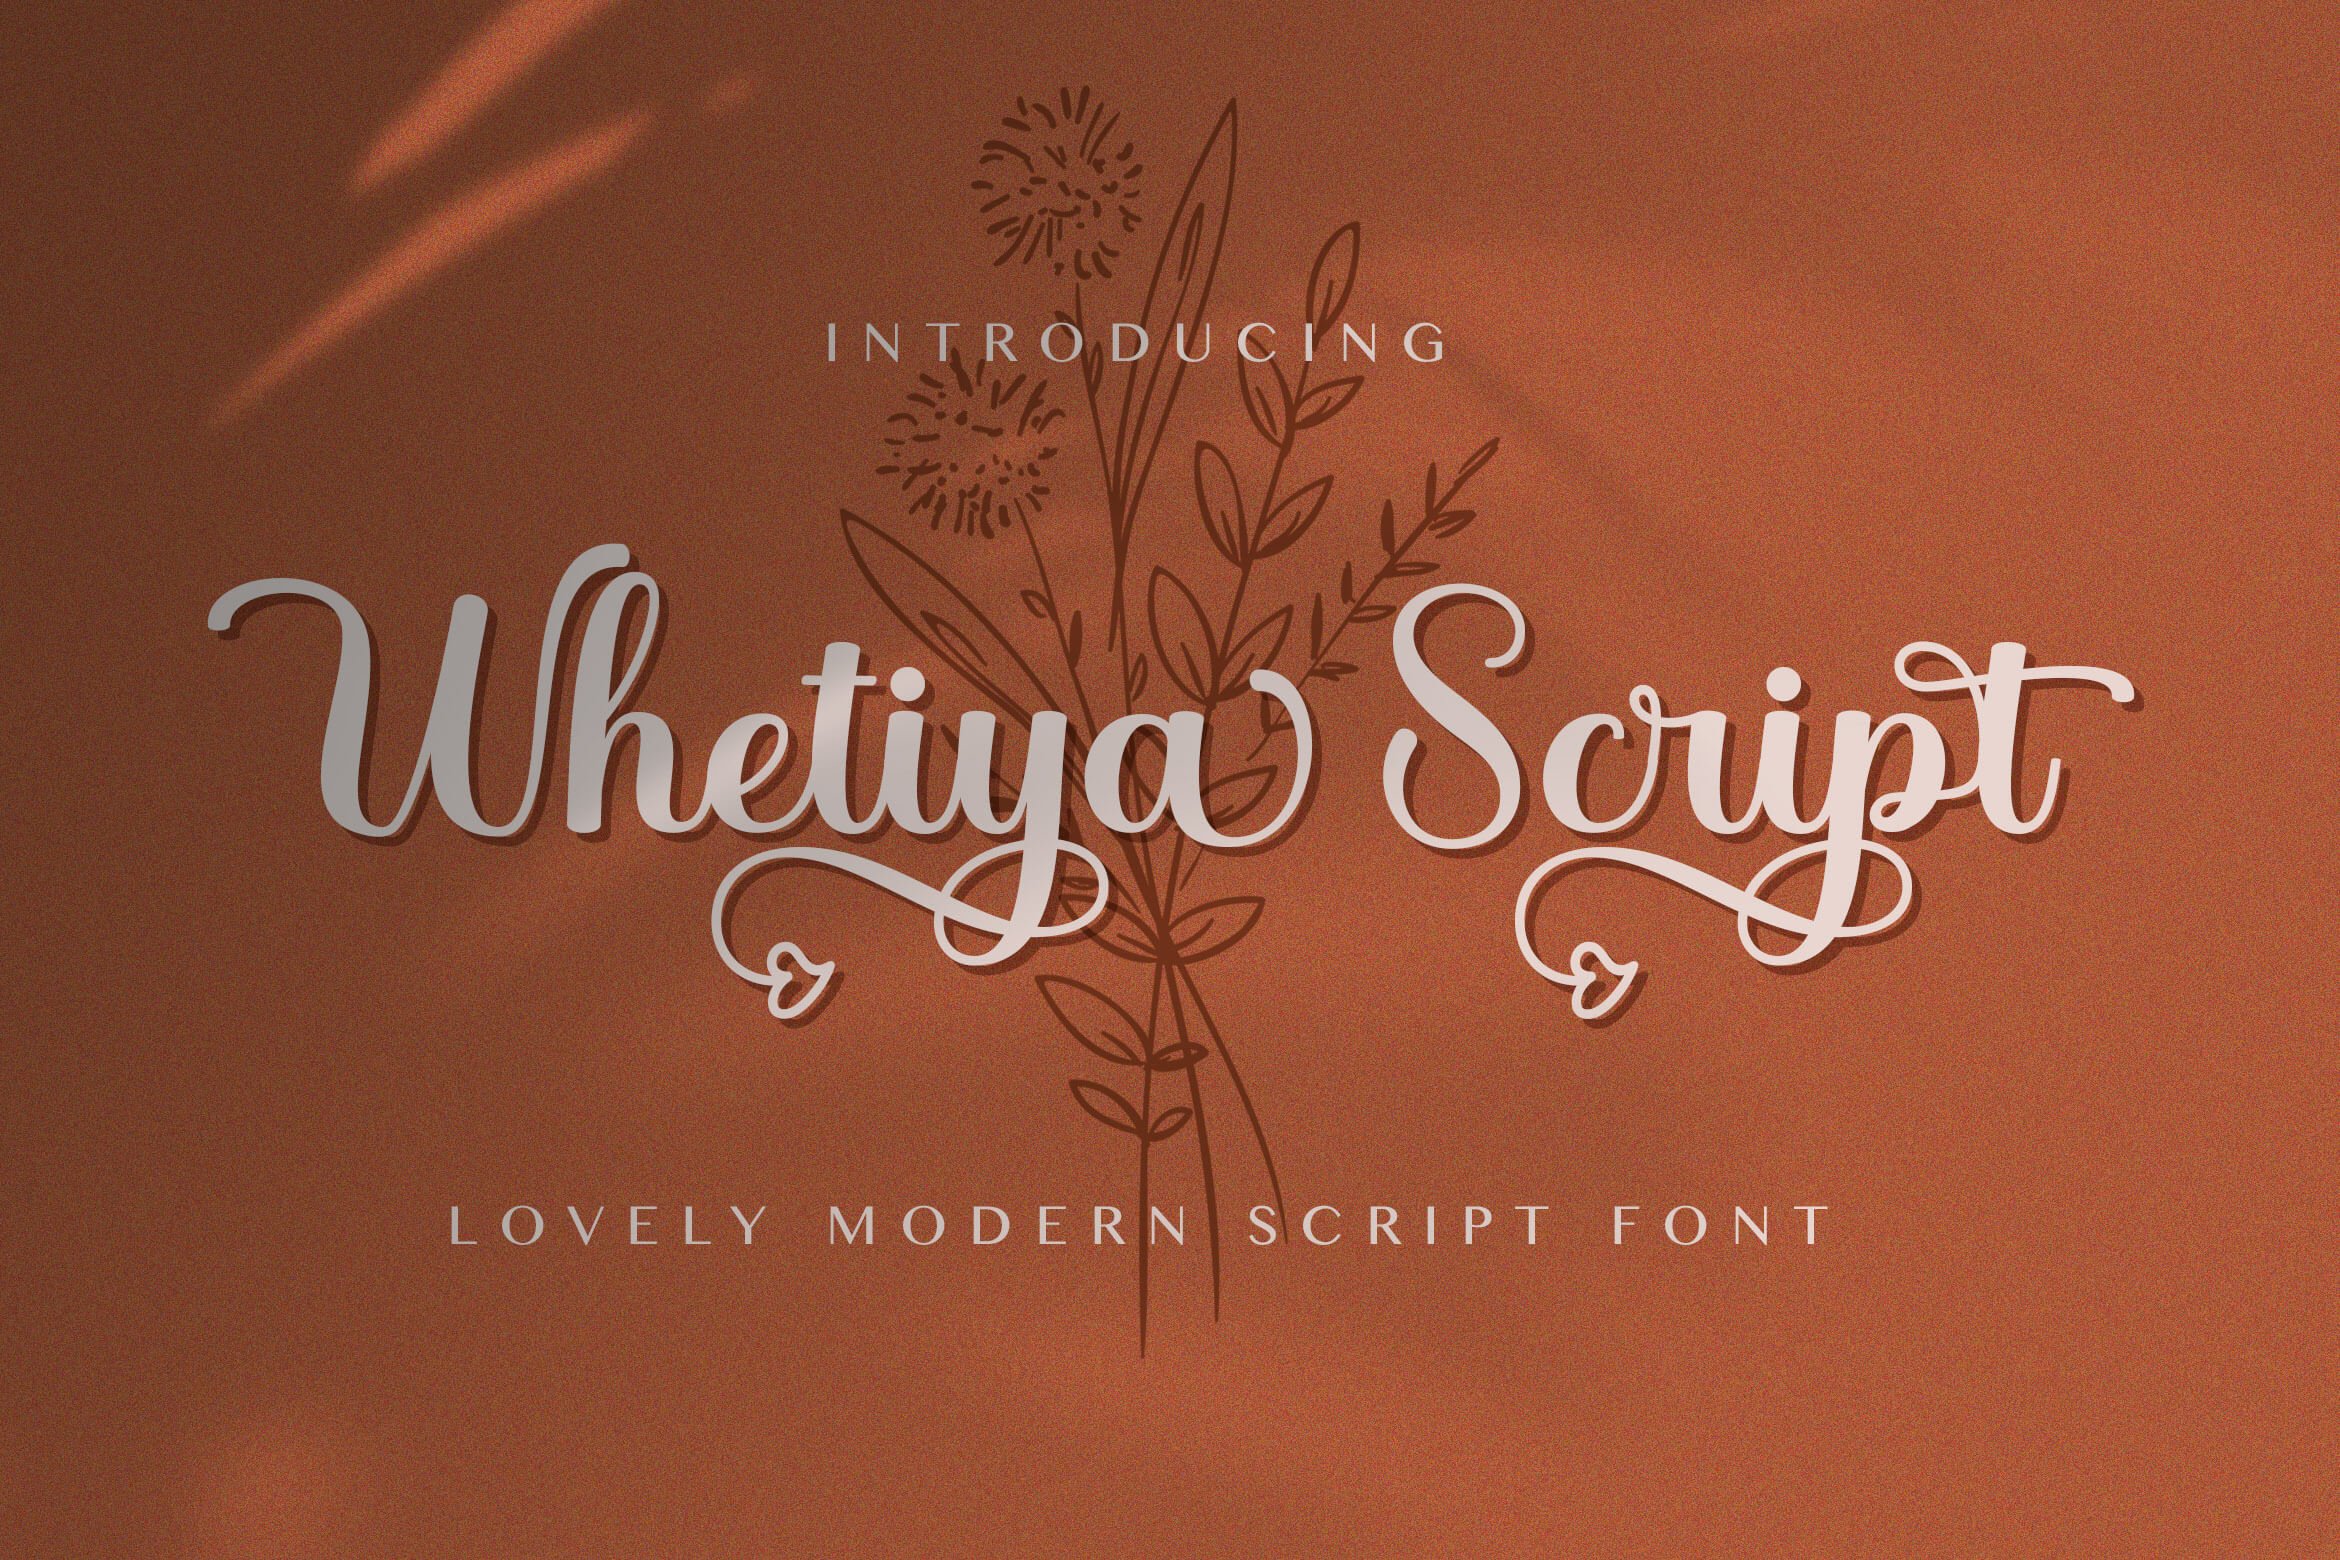 Whetiya - Love Script Font cover image.